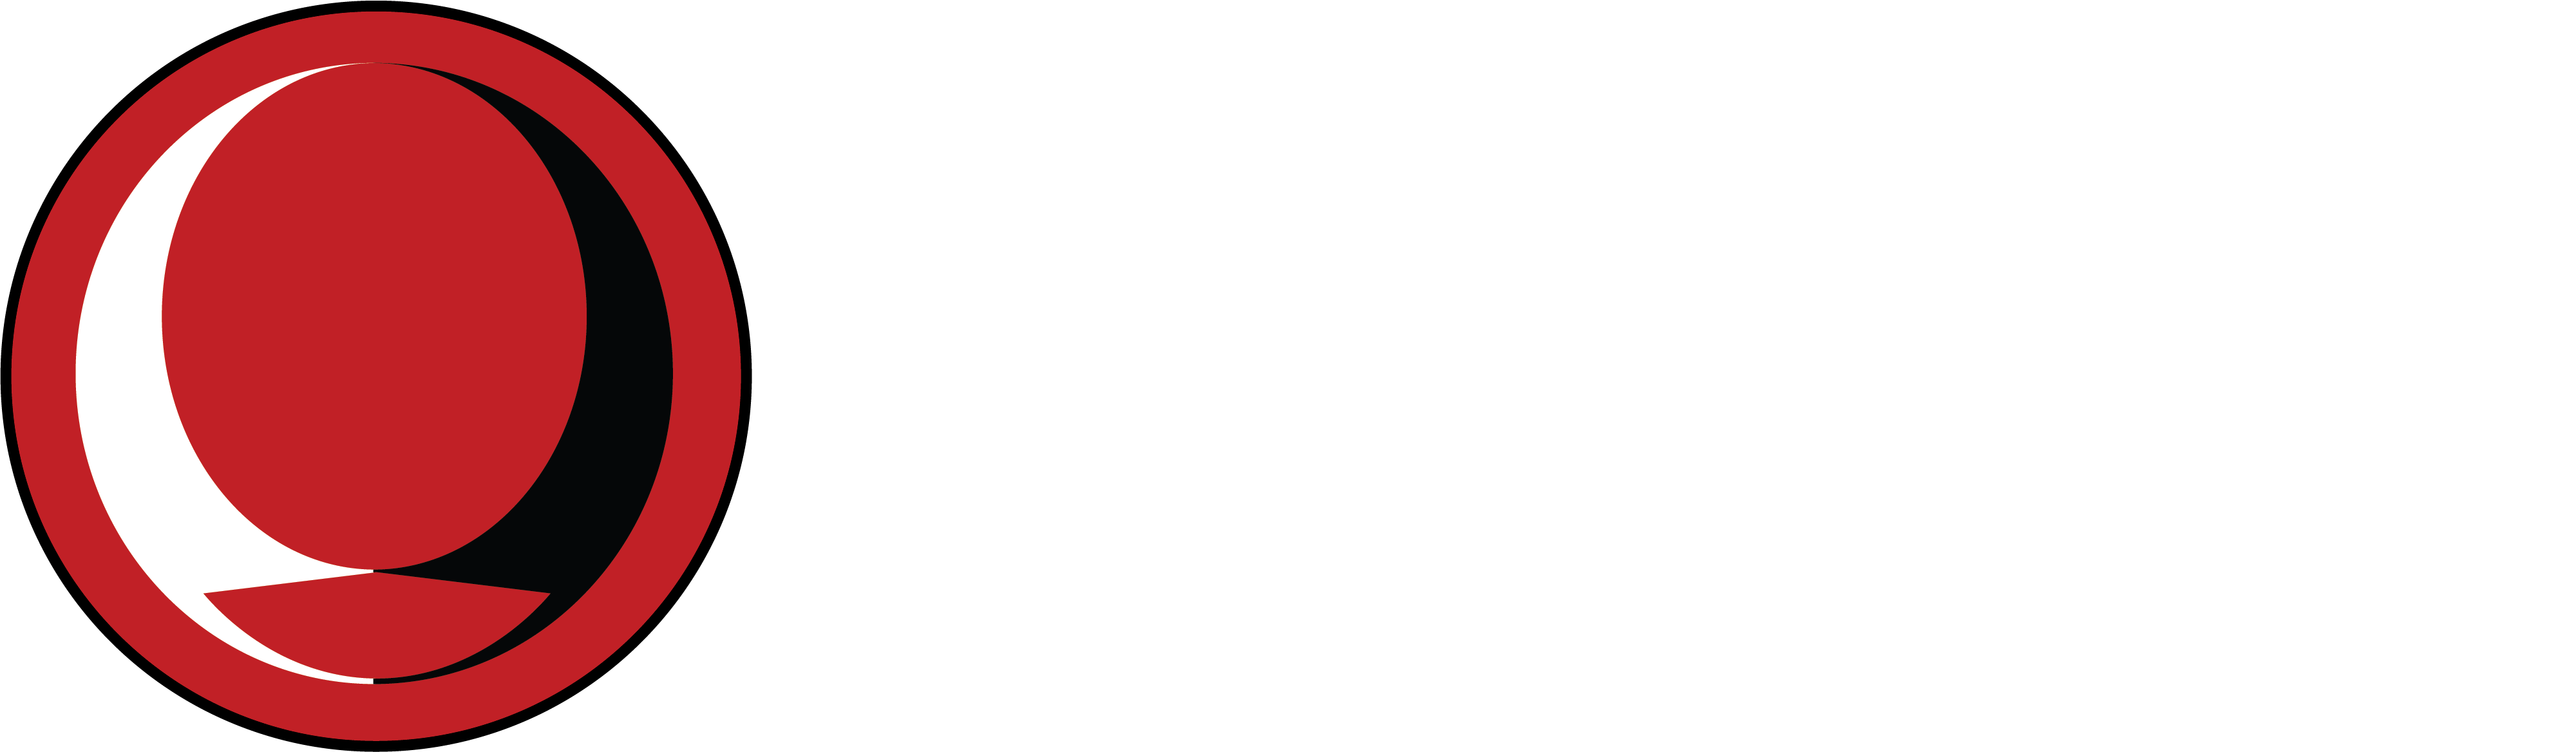 Karate Budokan International